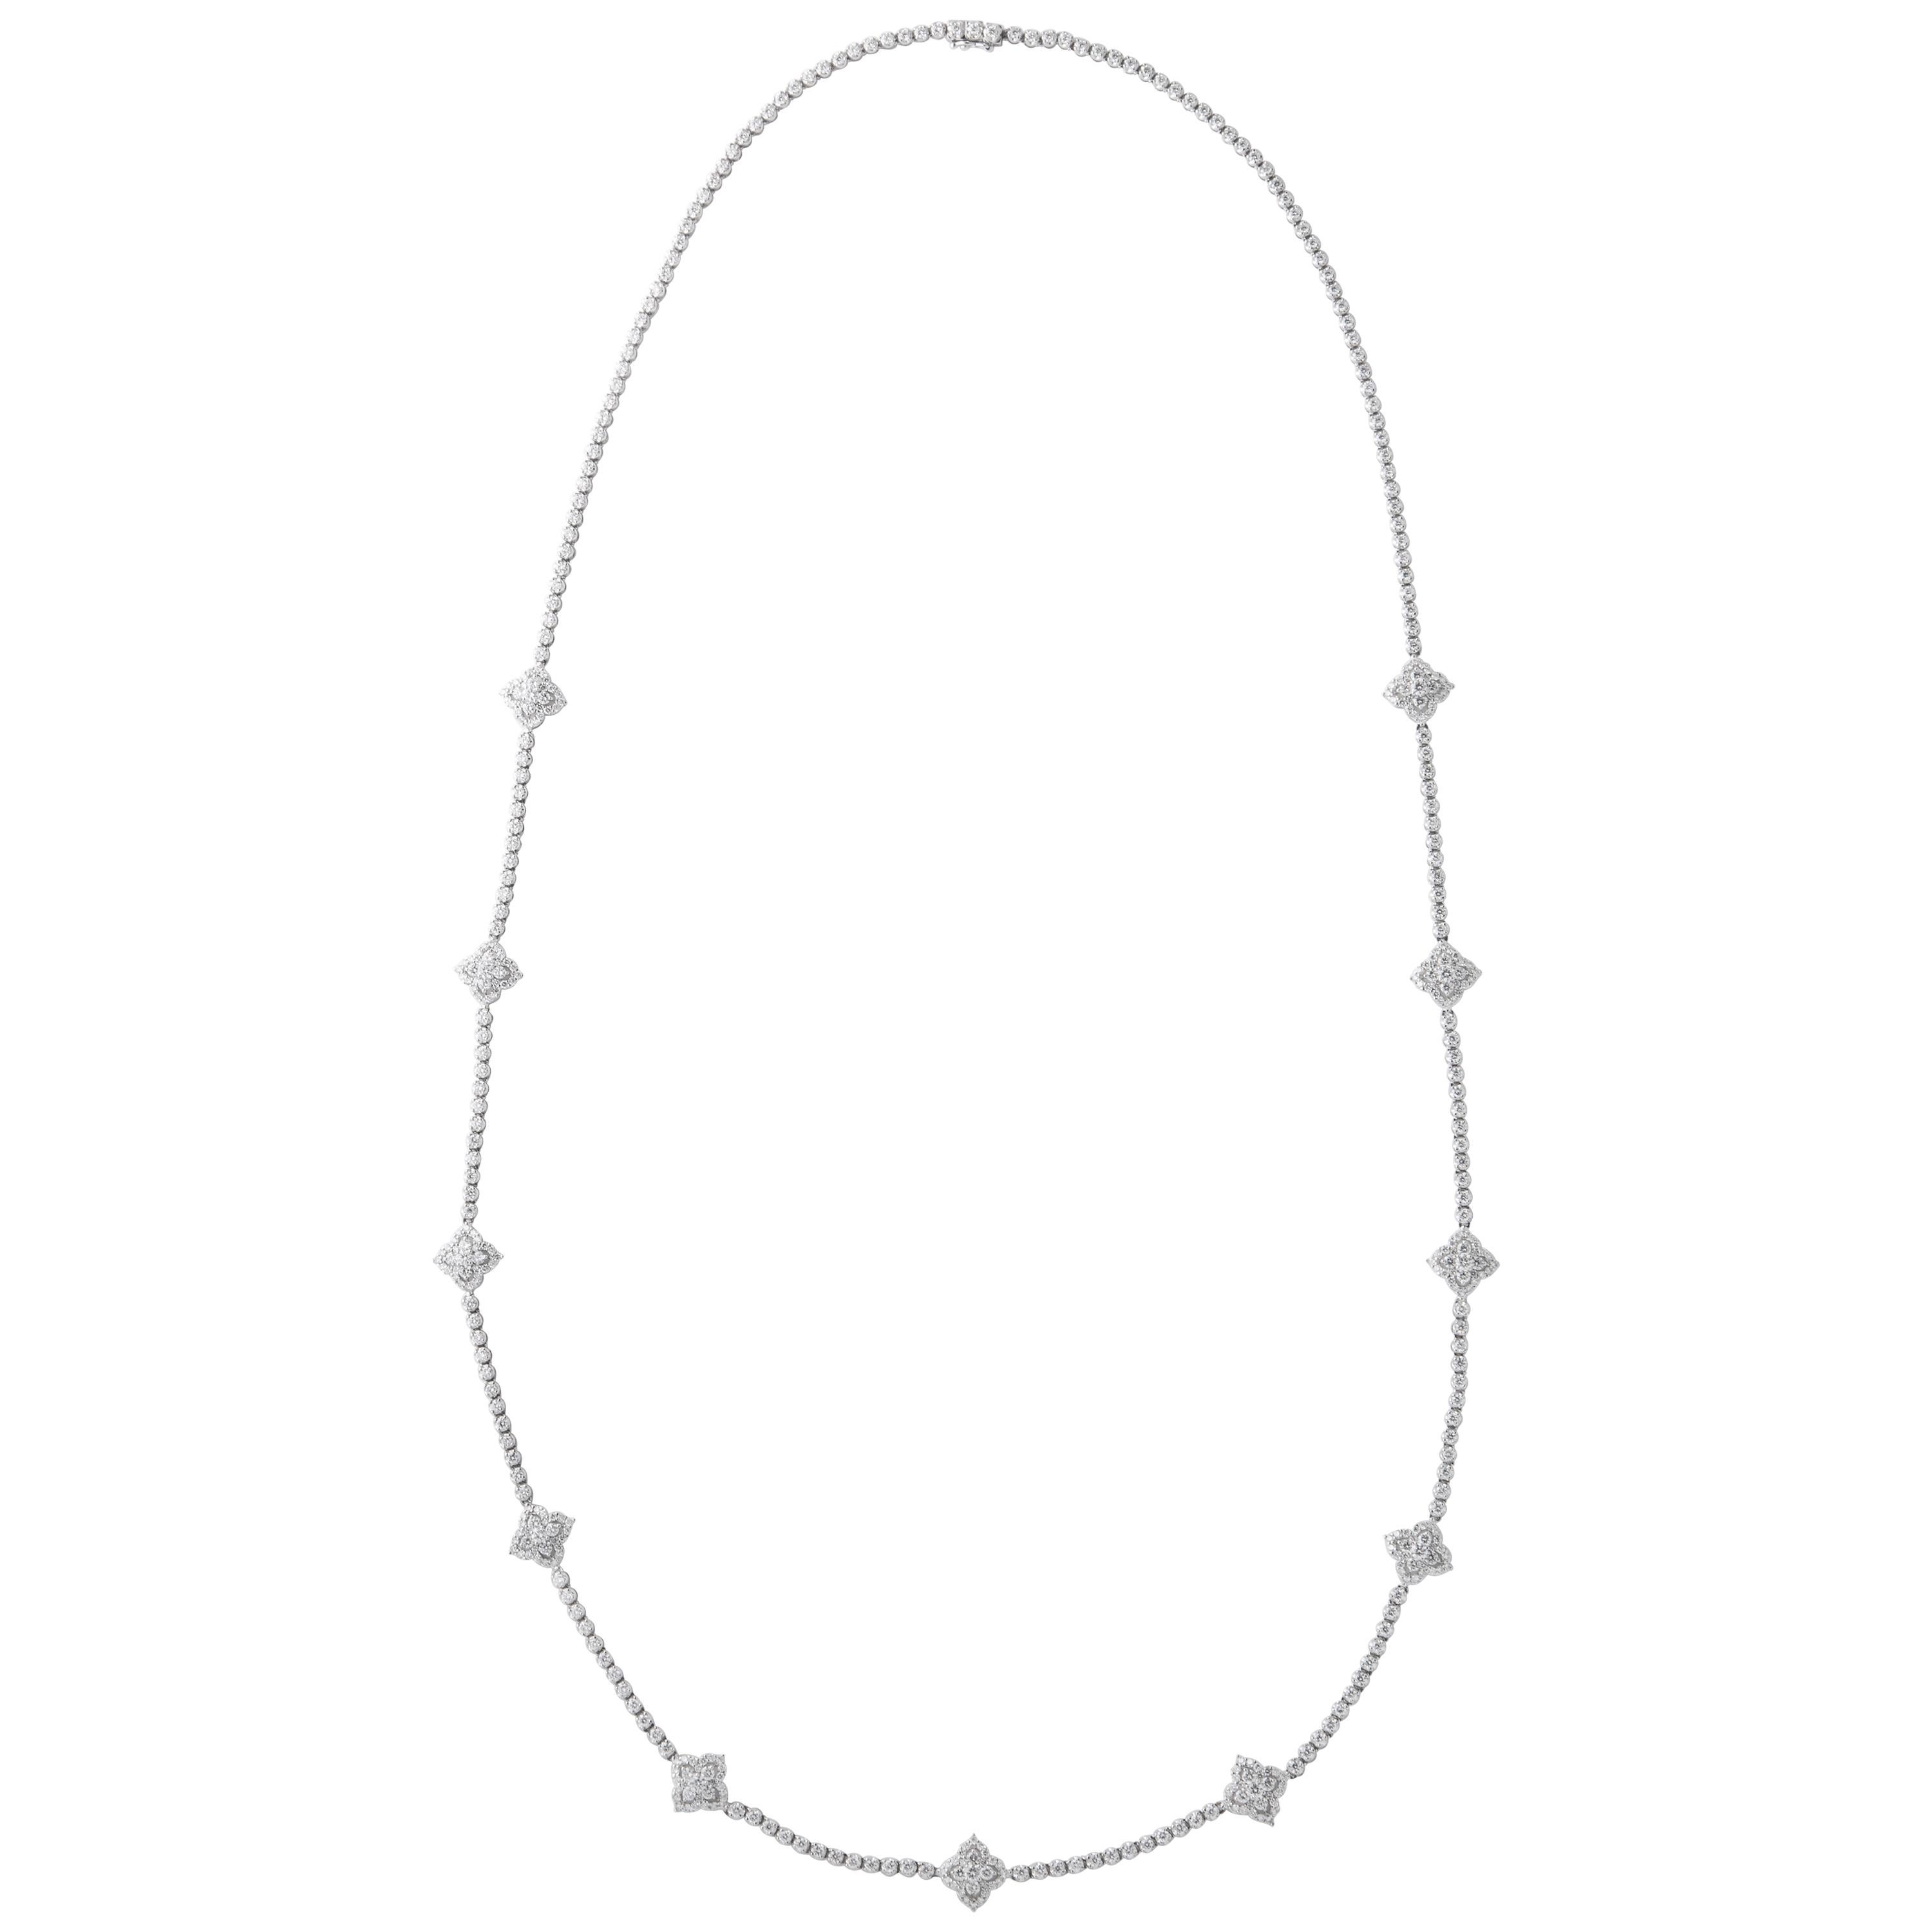 Long collier tennis avec motifs en diamants